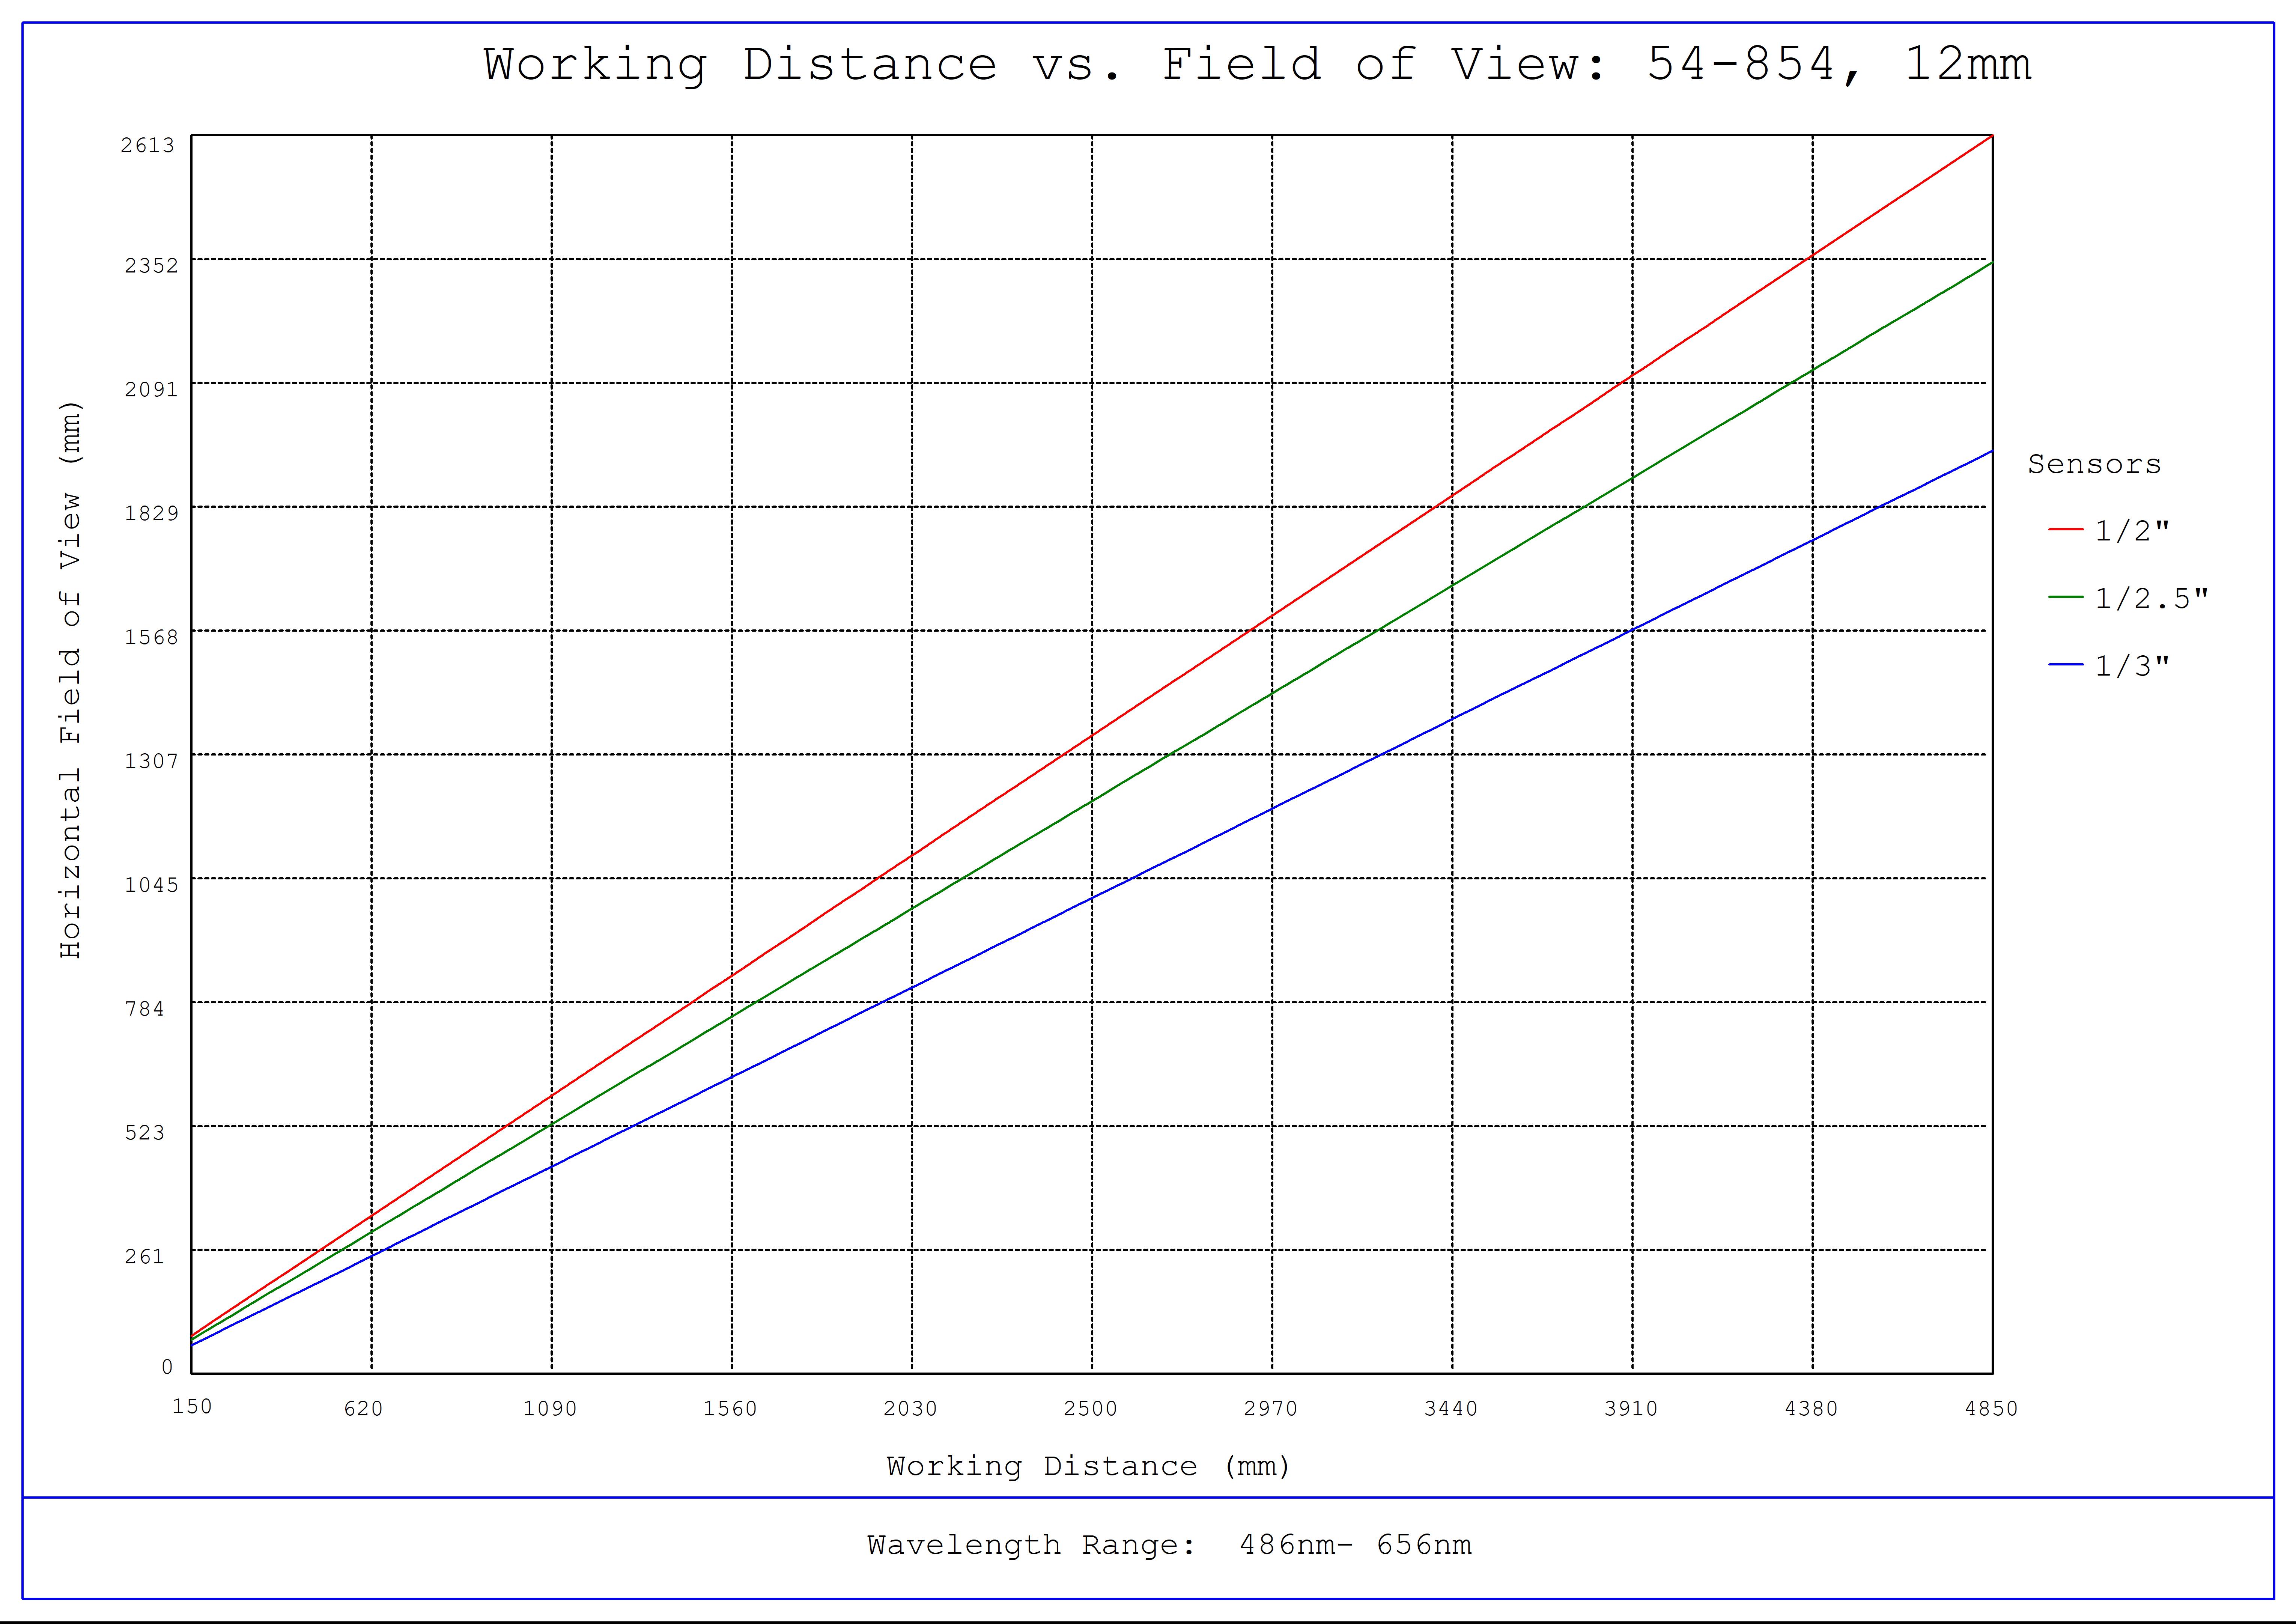 #54-854, f/2, 12mm Focal Length Green Series M12 Lens, Working Distance versus Field of View Plot